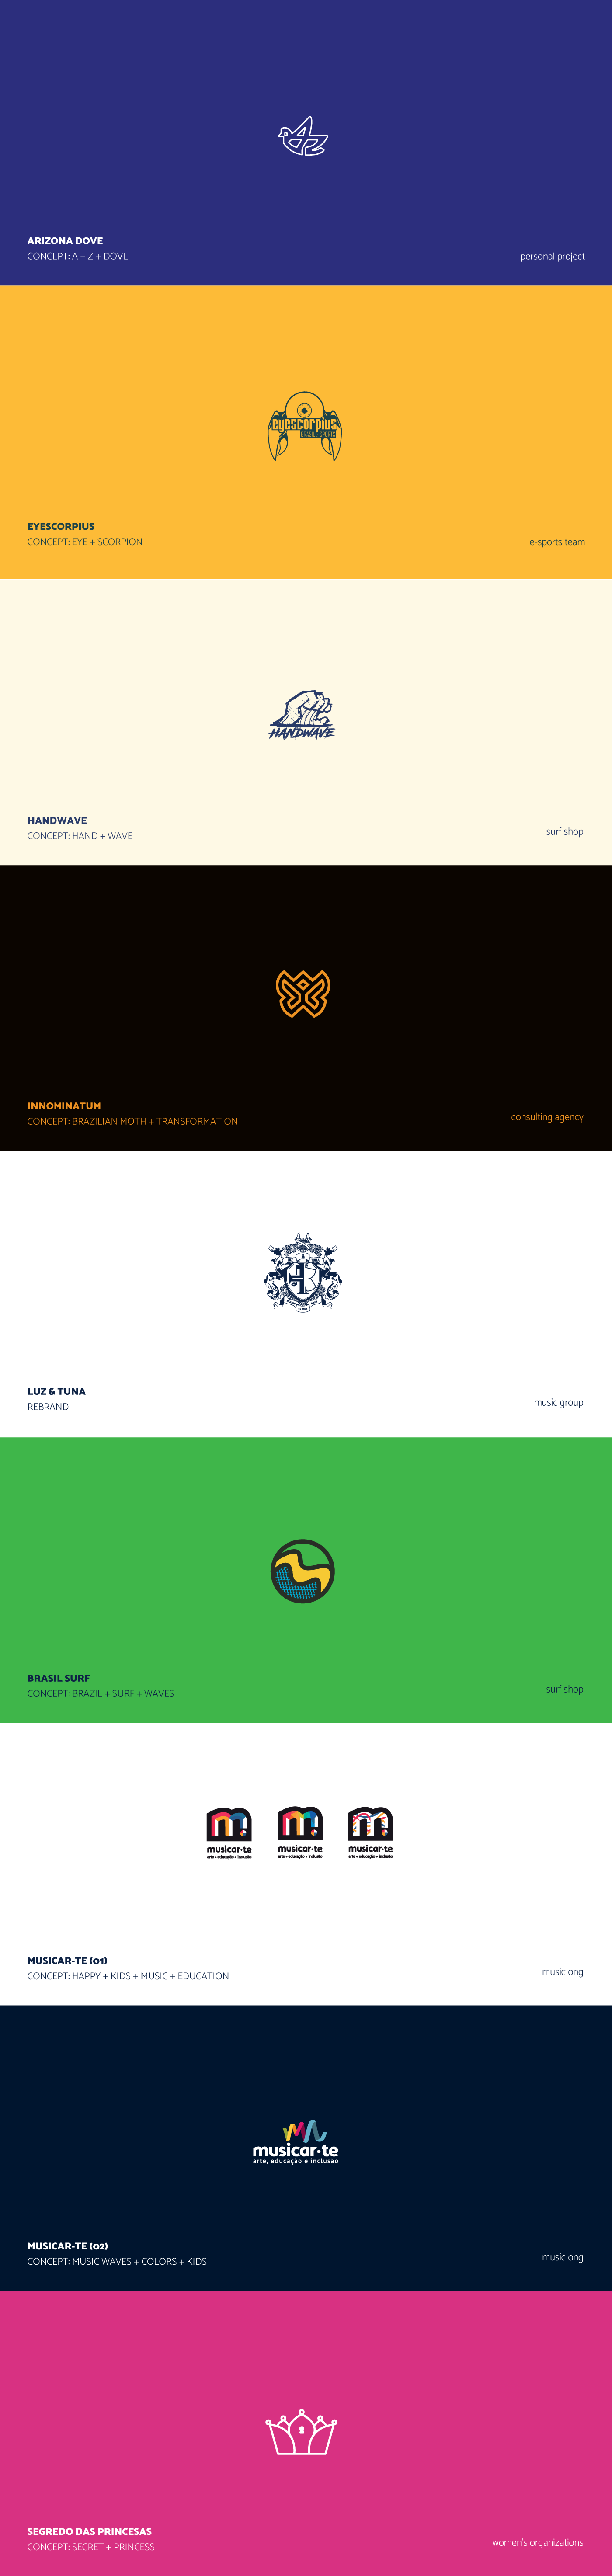 logofolio logo brand logos projects branding  marcas 2018 logos